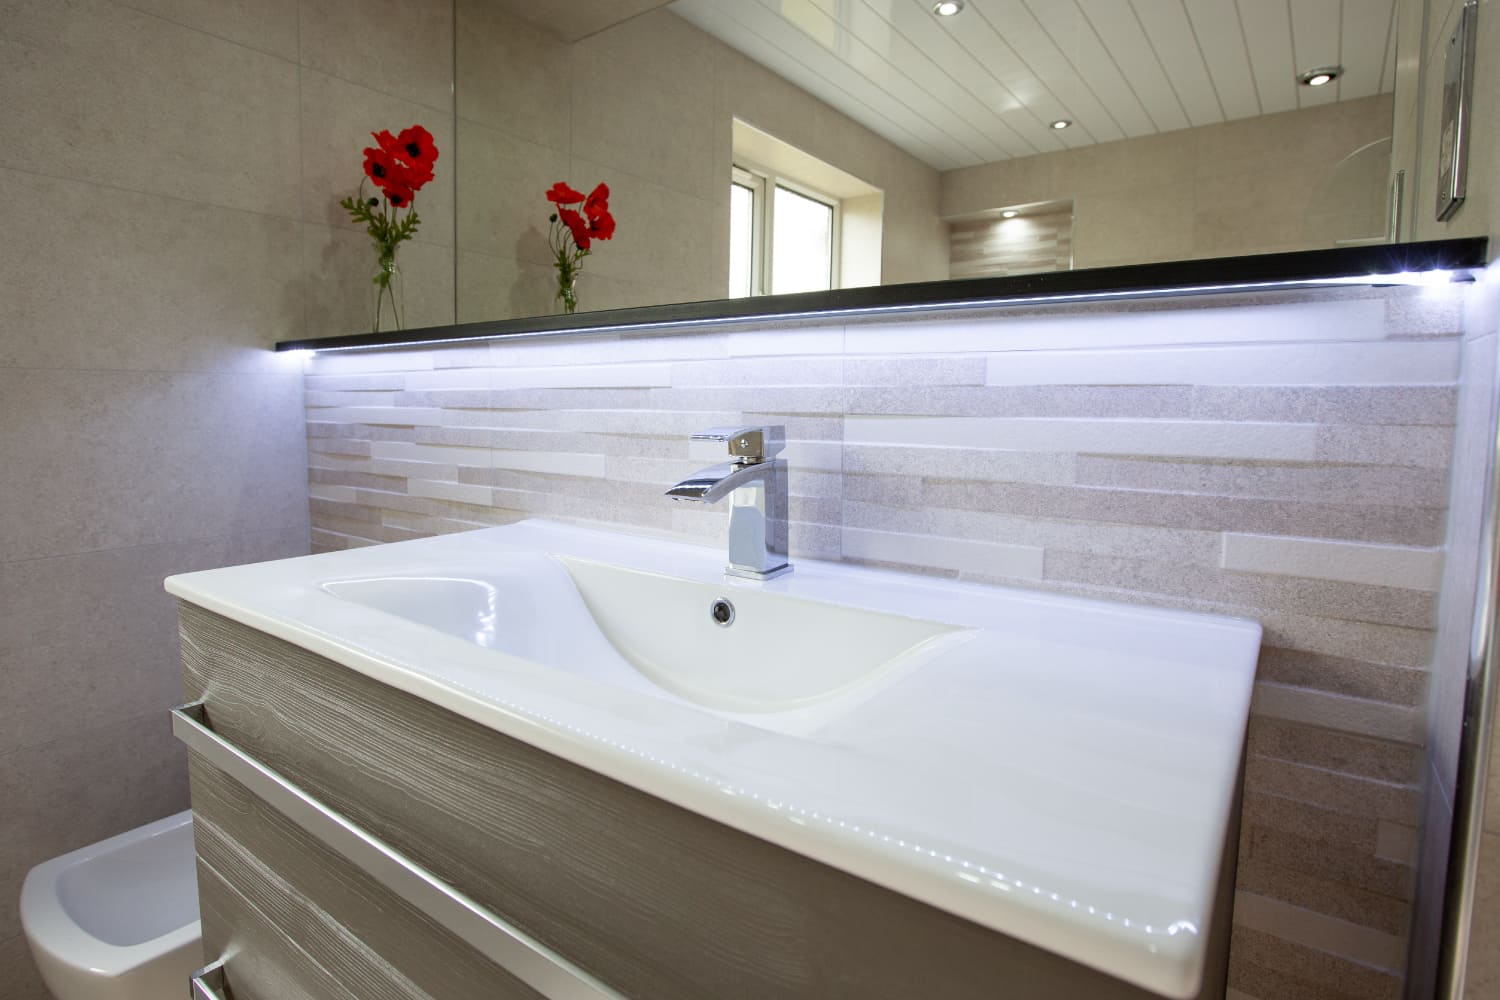 Three luxurious, calming modern bathrooms for Burnley home